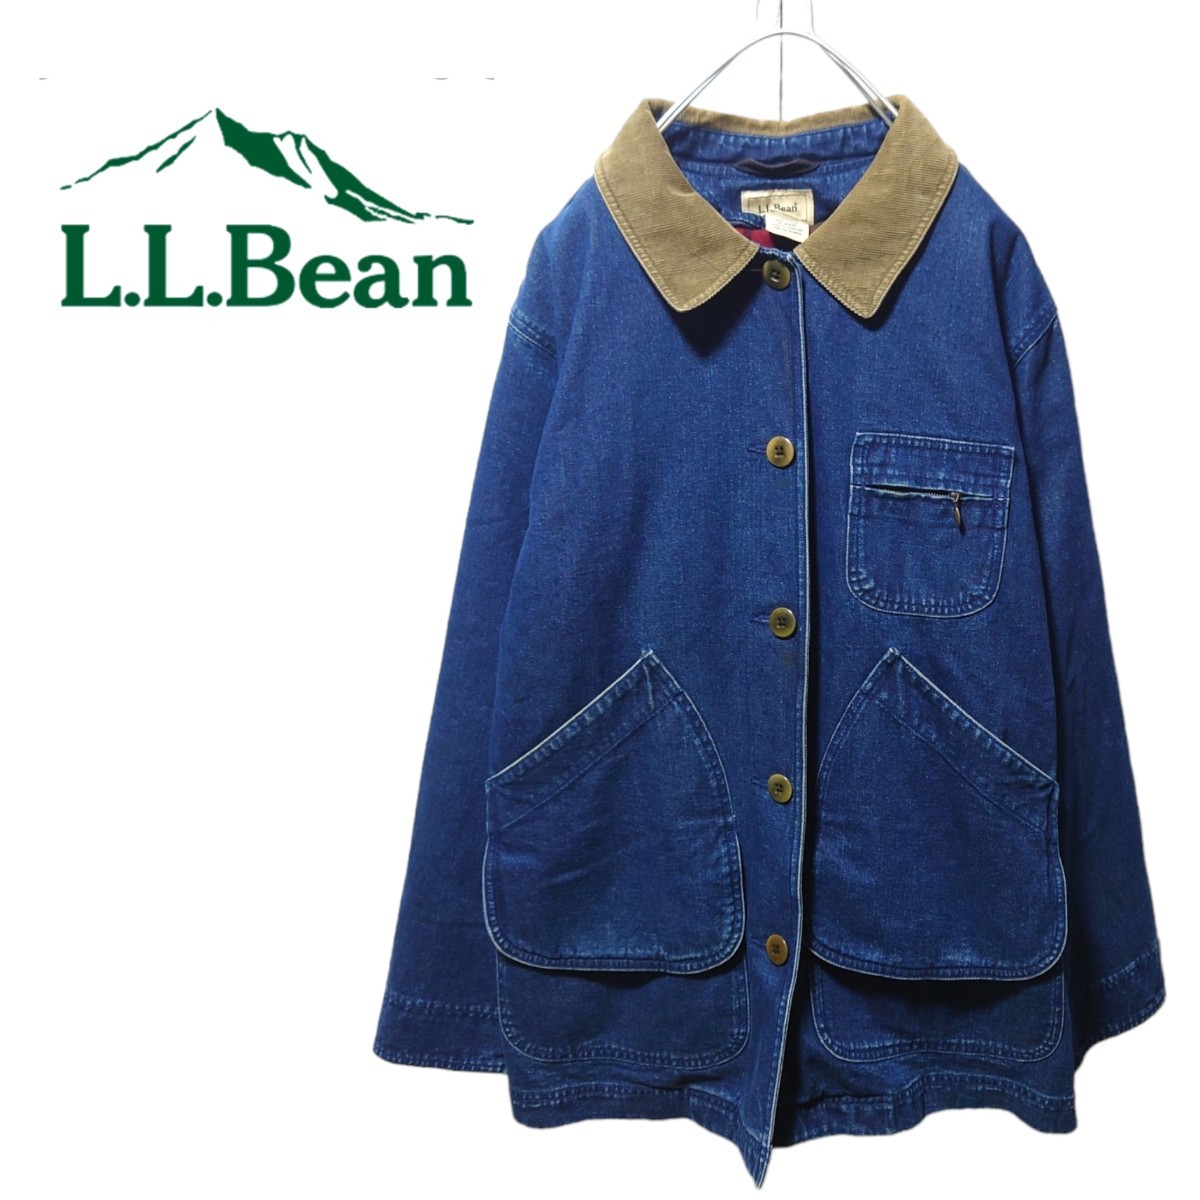 【L.L.Bean】コーデュロイ襟 デニムハンティングジャケット S-224